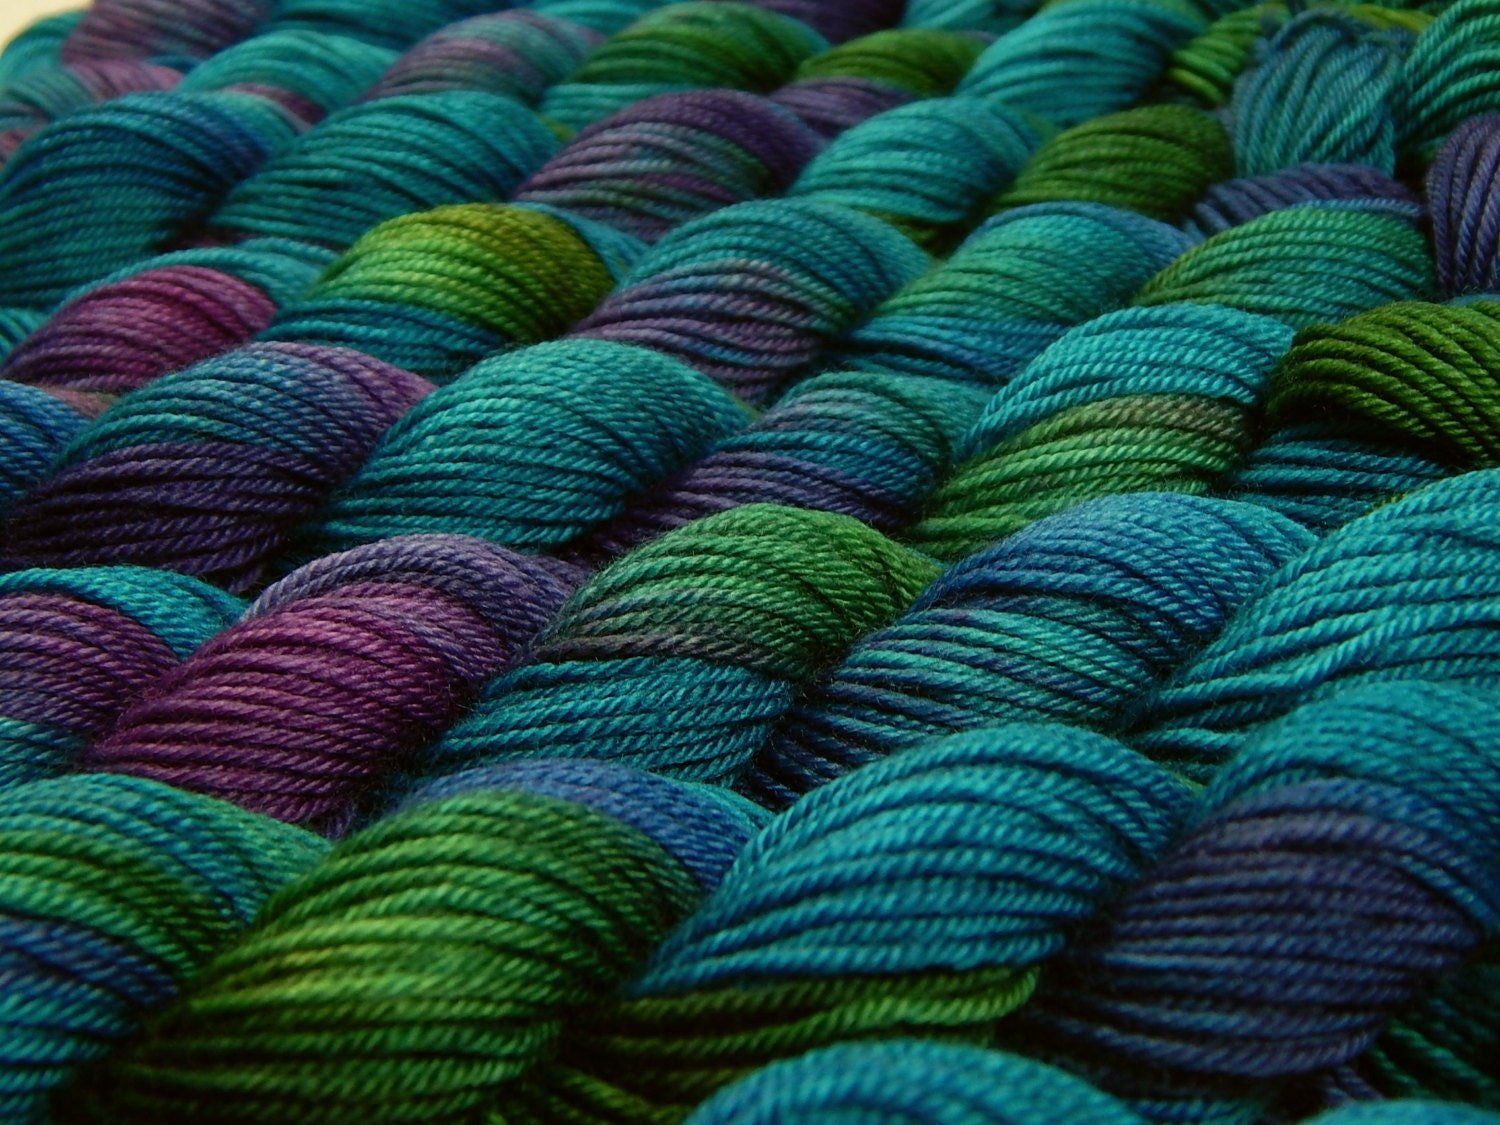 Mini Skeins Hand Dyed Yarn, Sock Weight Superwash Merino Wool - Aegean Multi - Indie Fingering Knitting Yarn, Vibrant Blue Green Turquoise